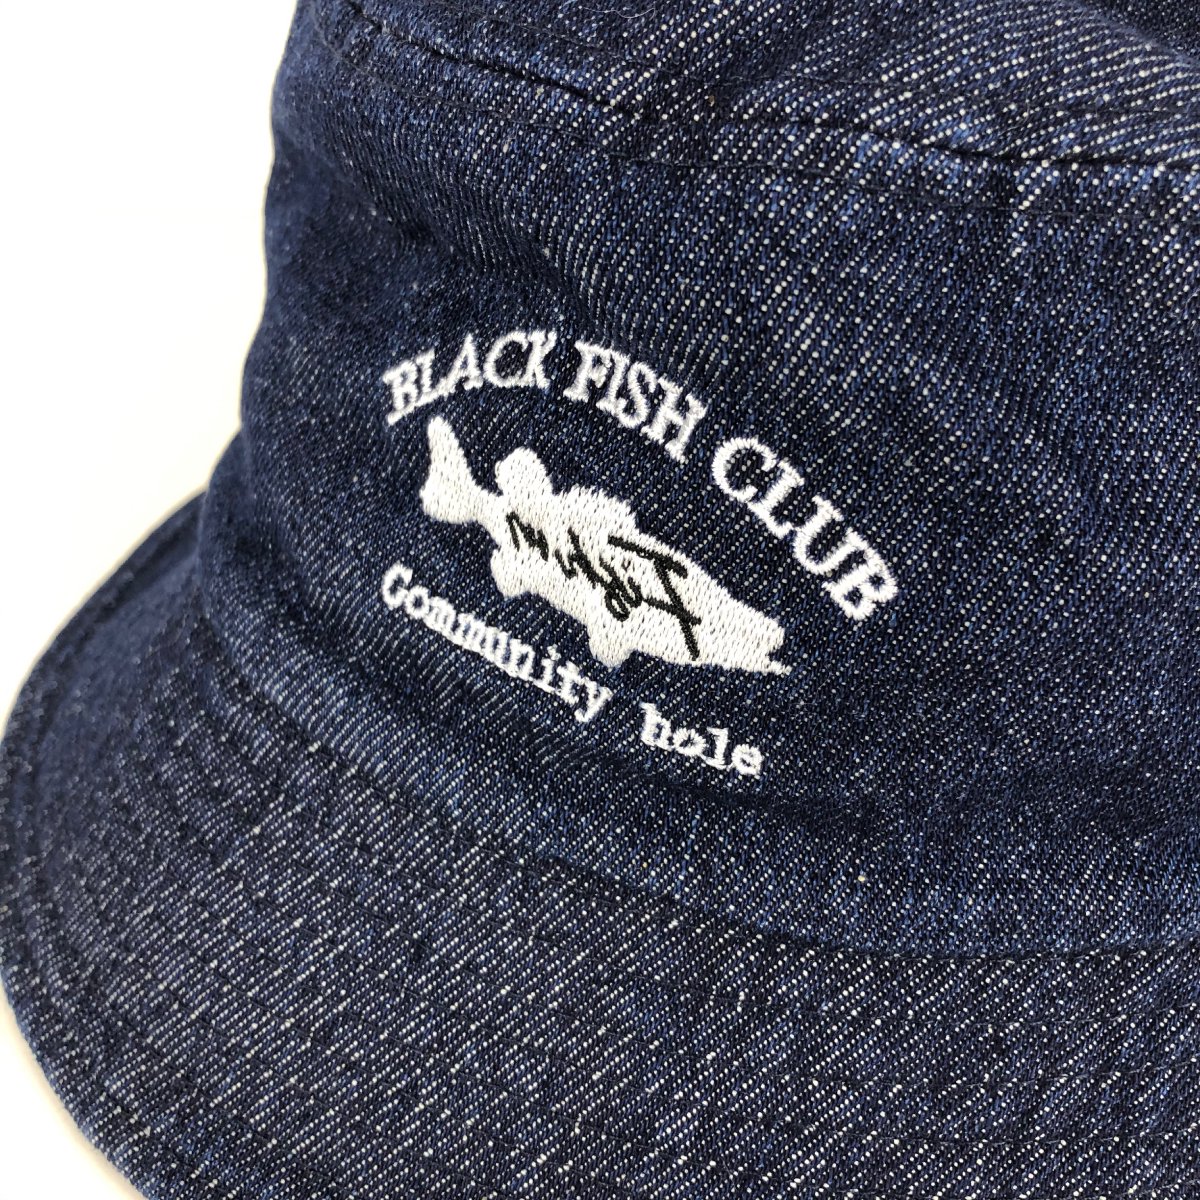 Club Hat 詳細画像6